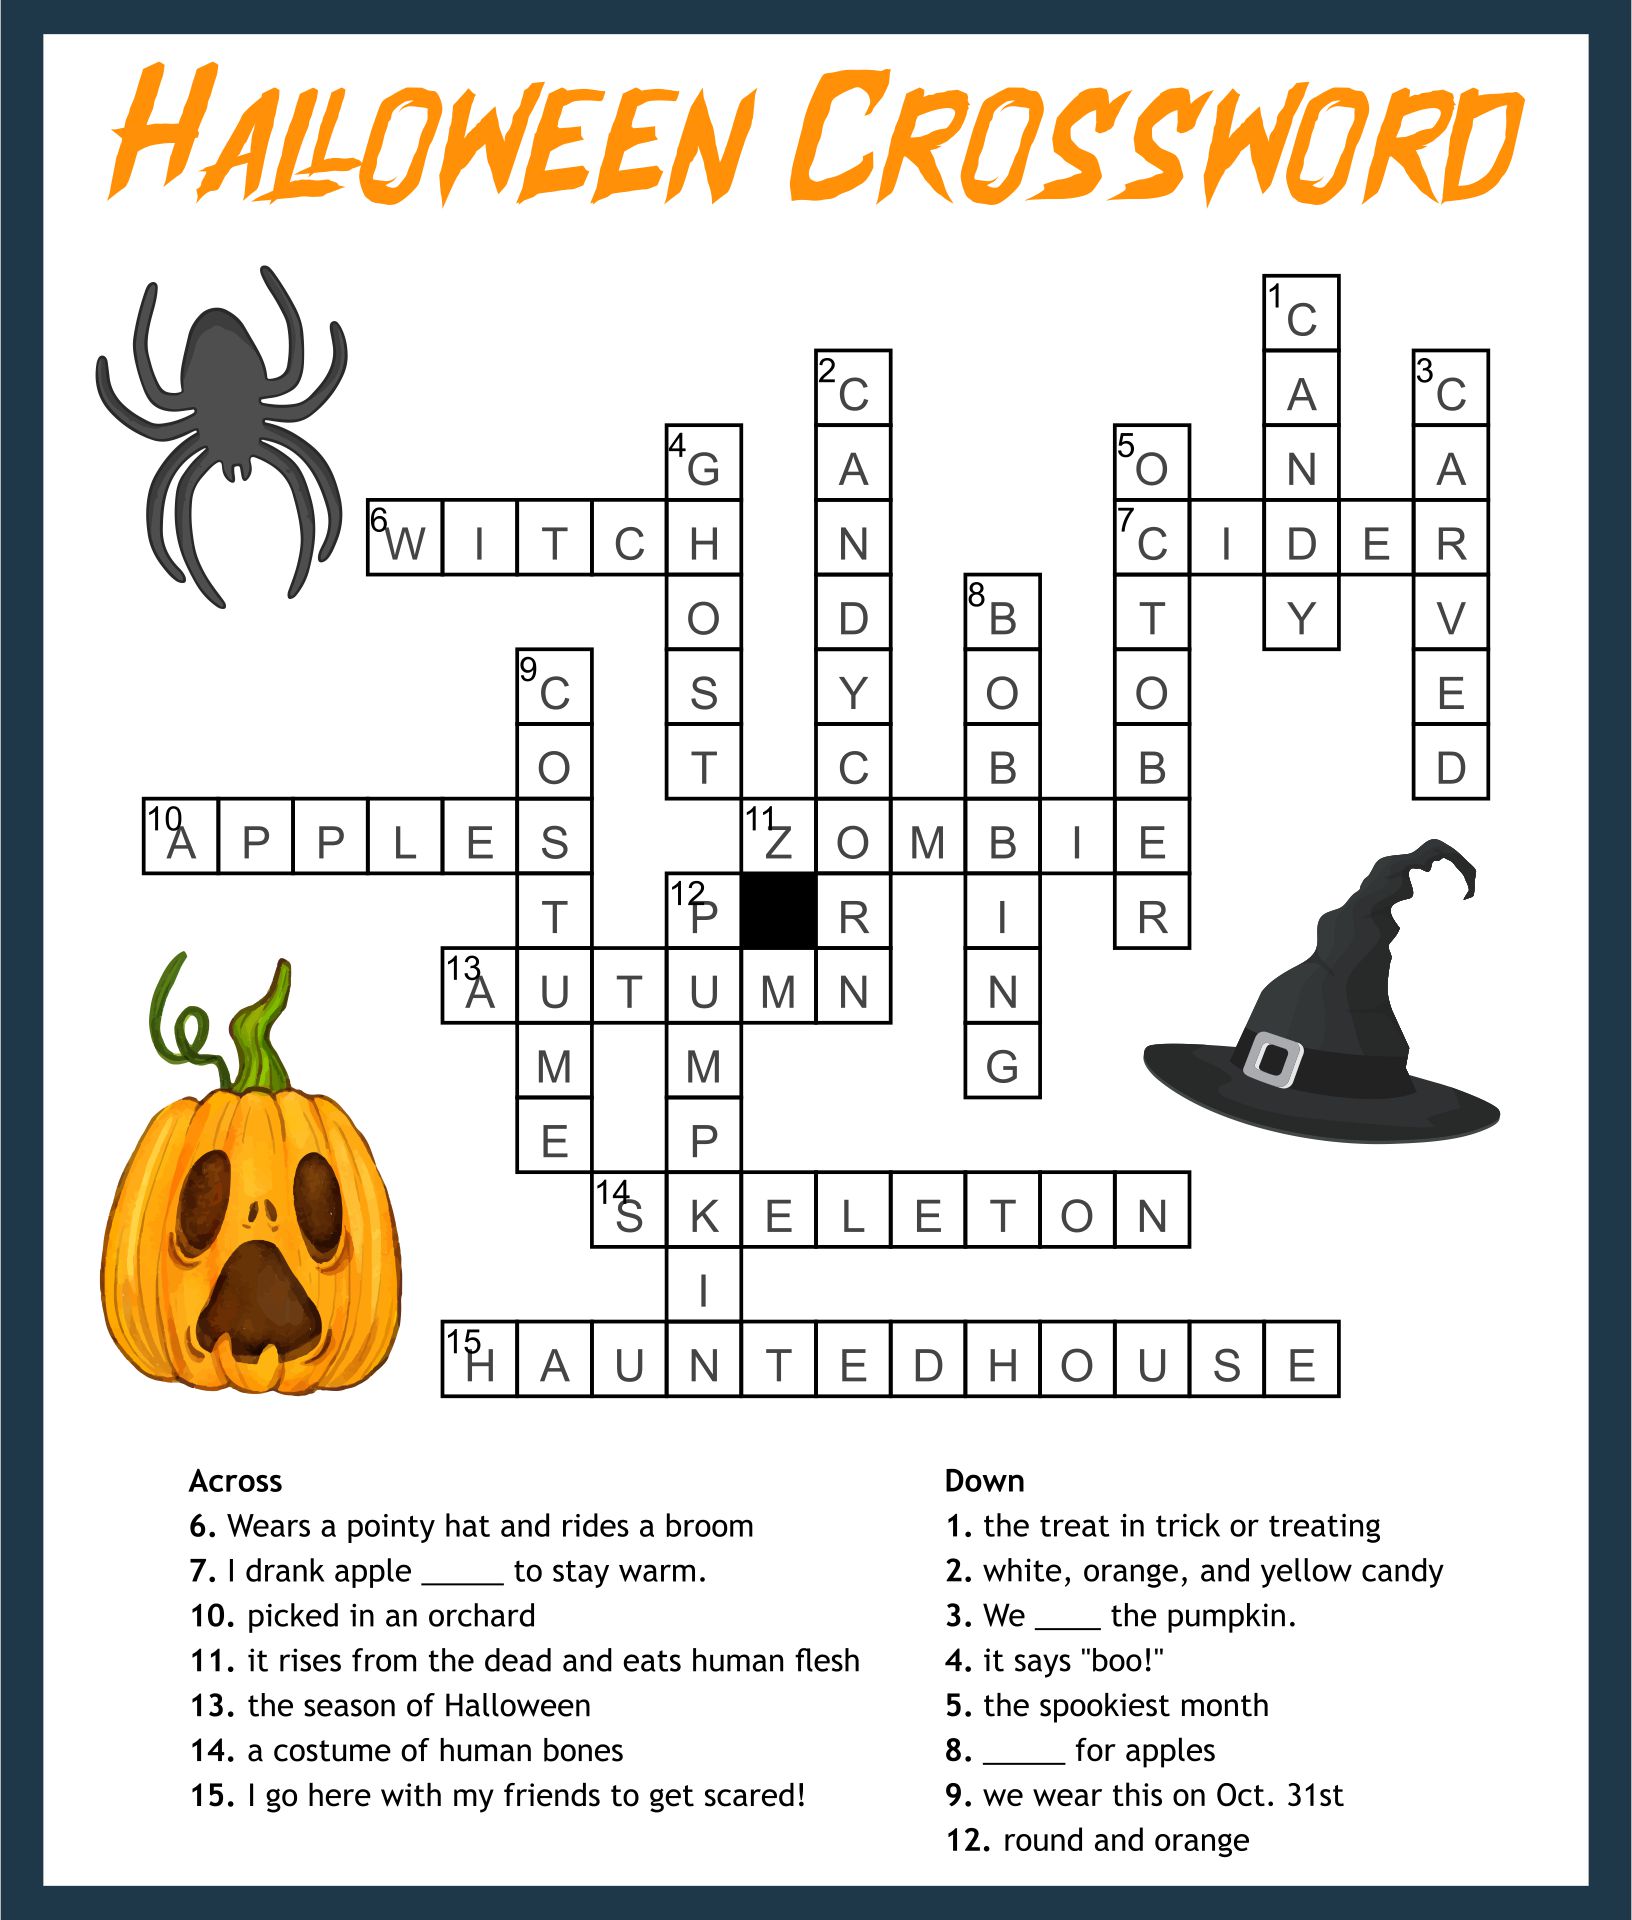 Free Printable Halloween Crossword Puzzle With Key